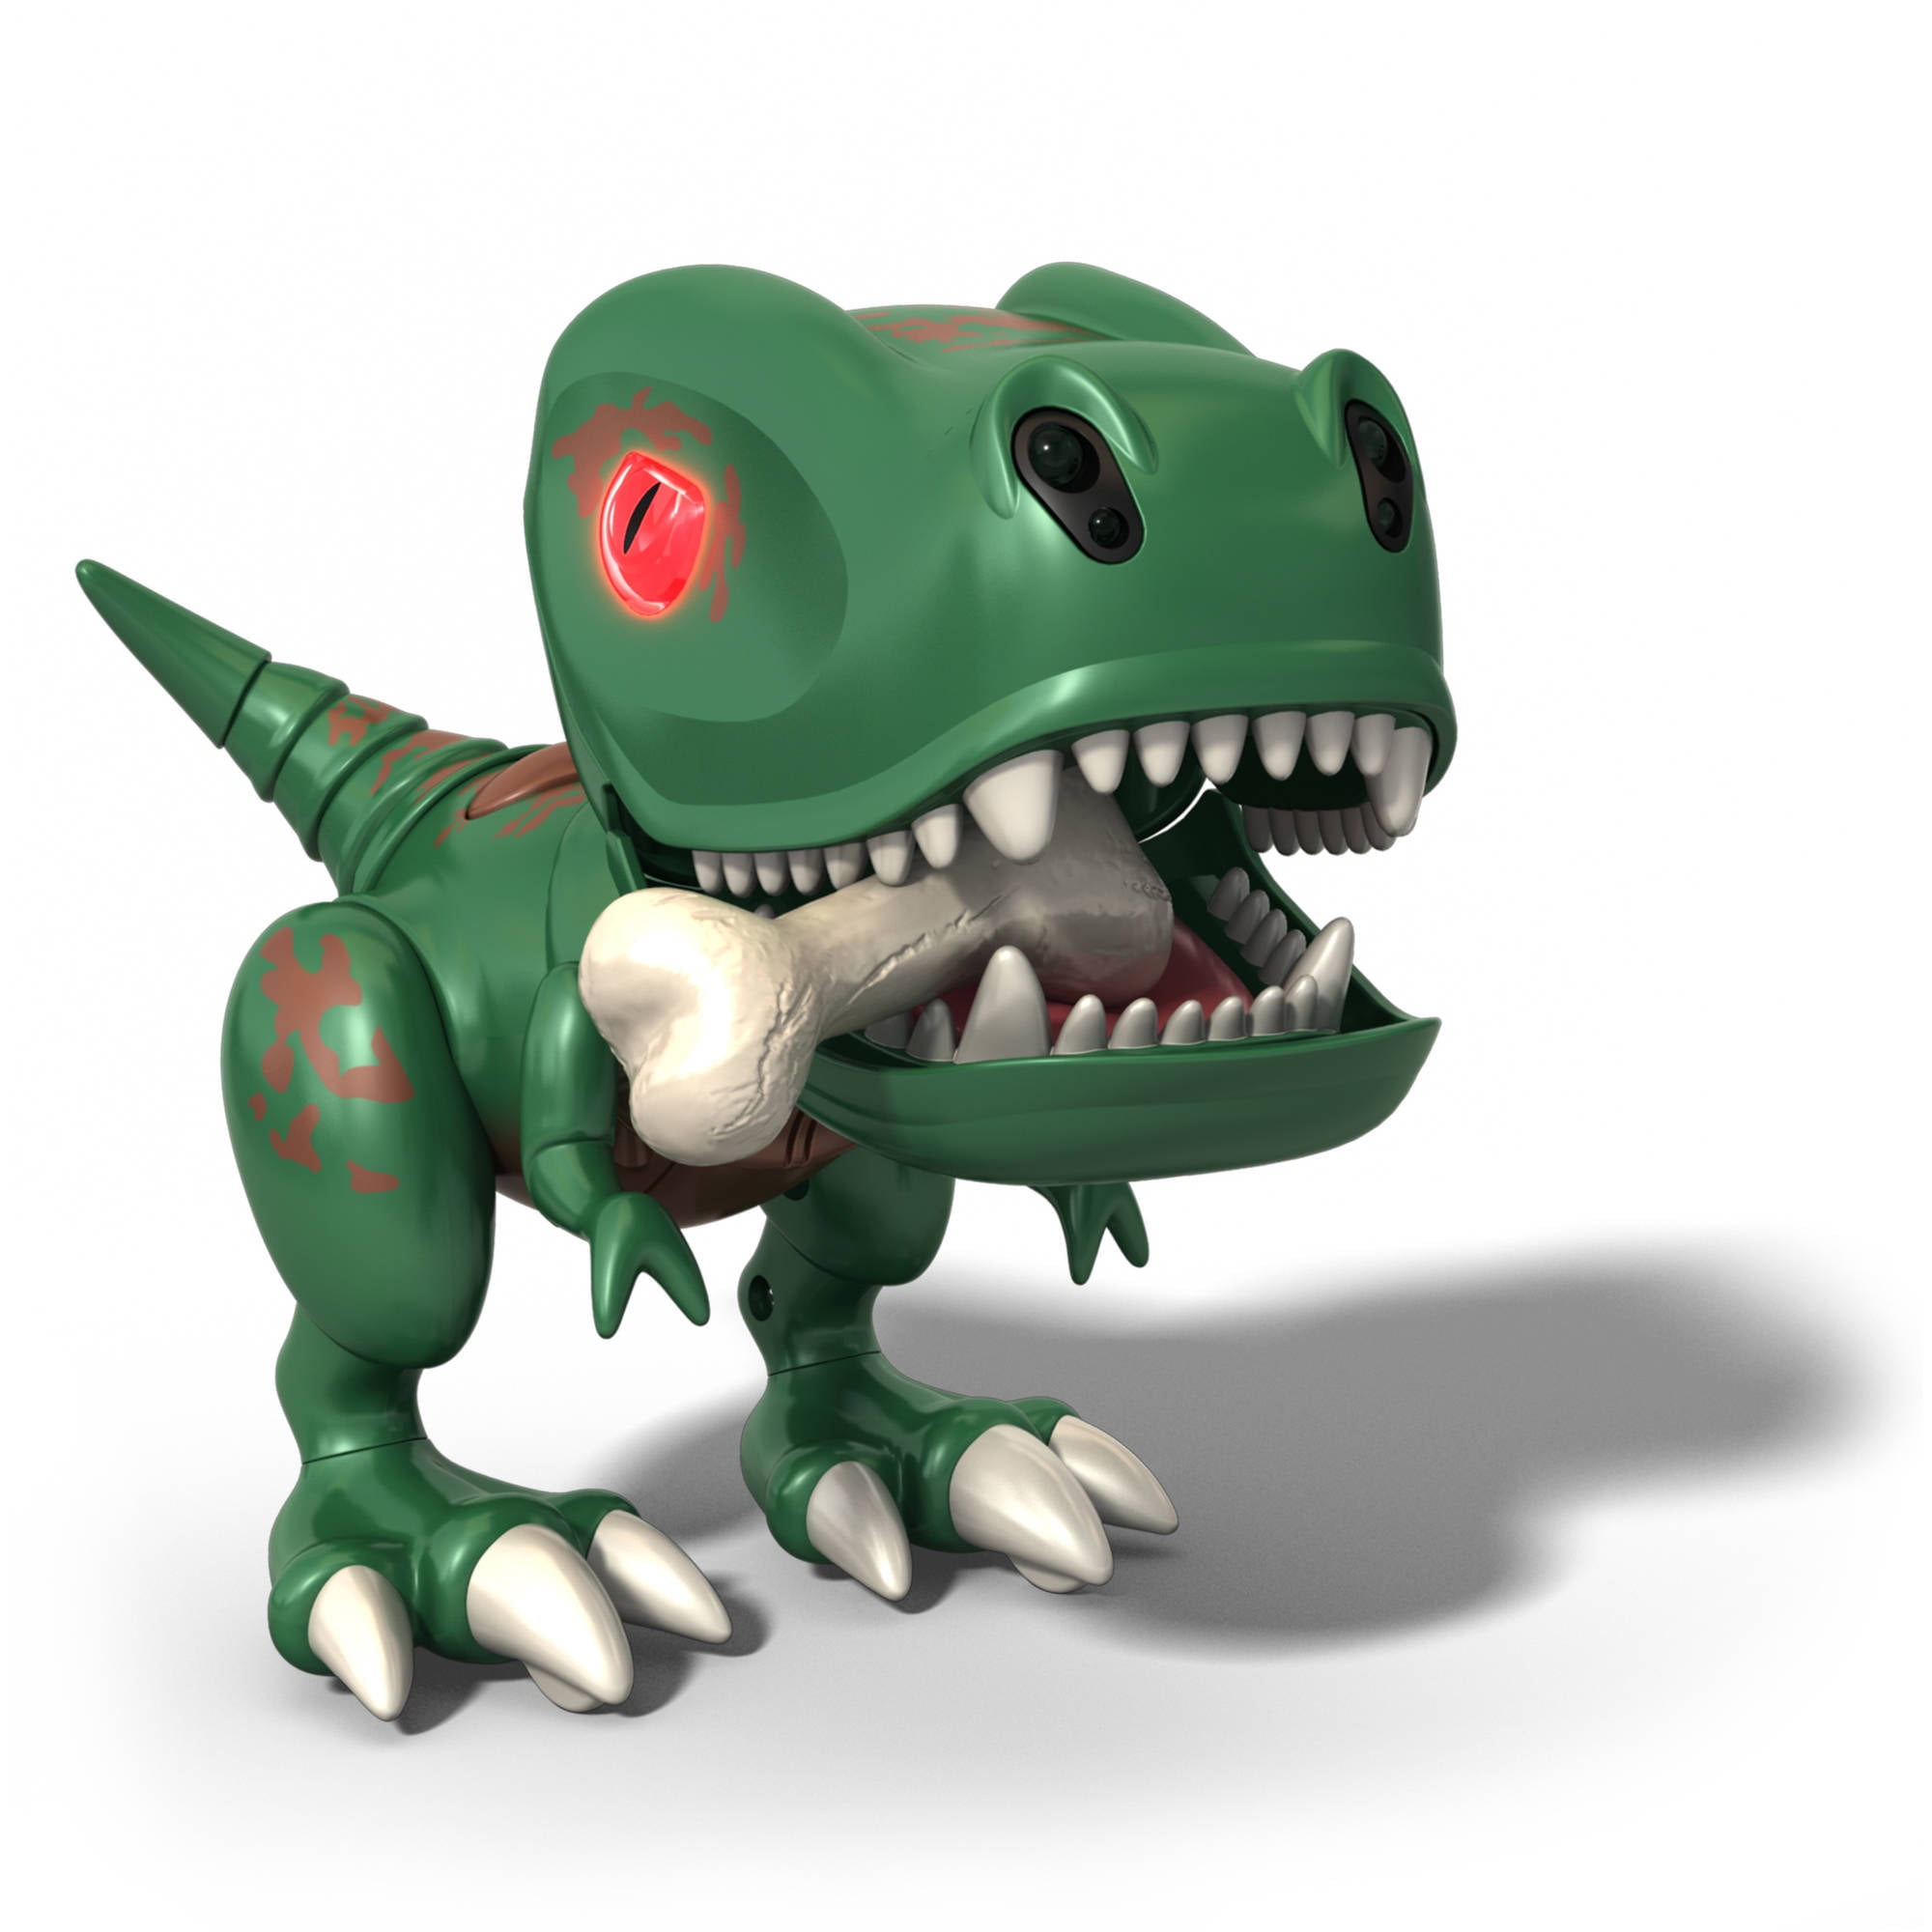 Robot Dinosaur Toy Instructions | Wow Blog